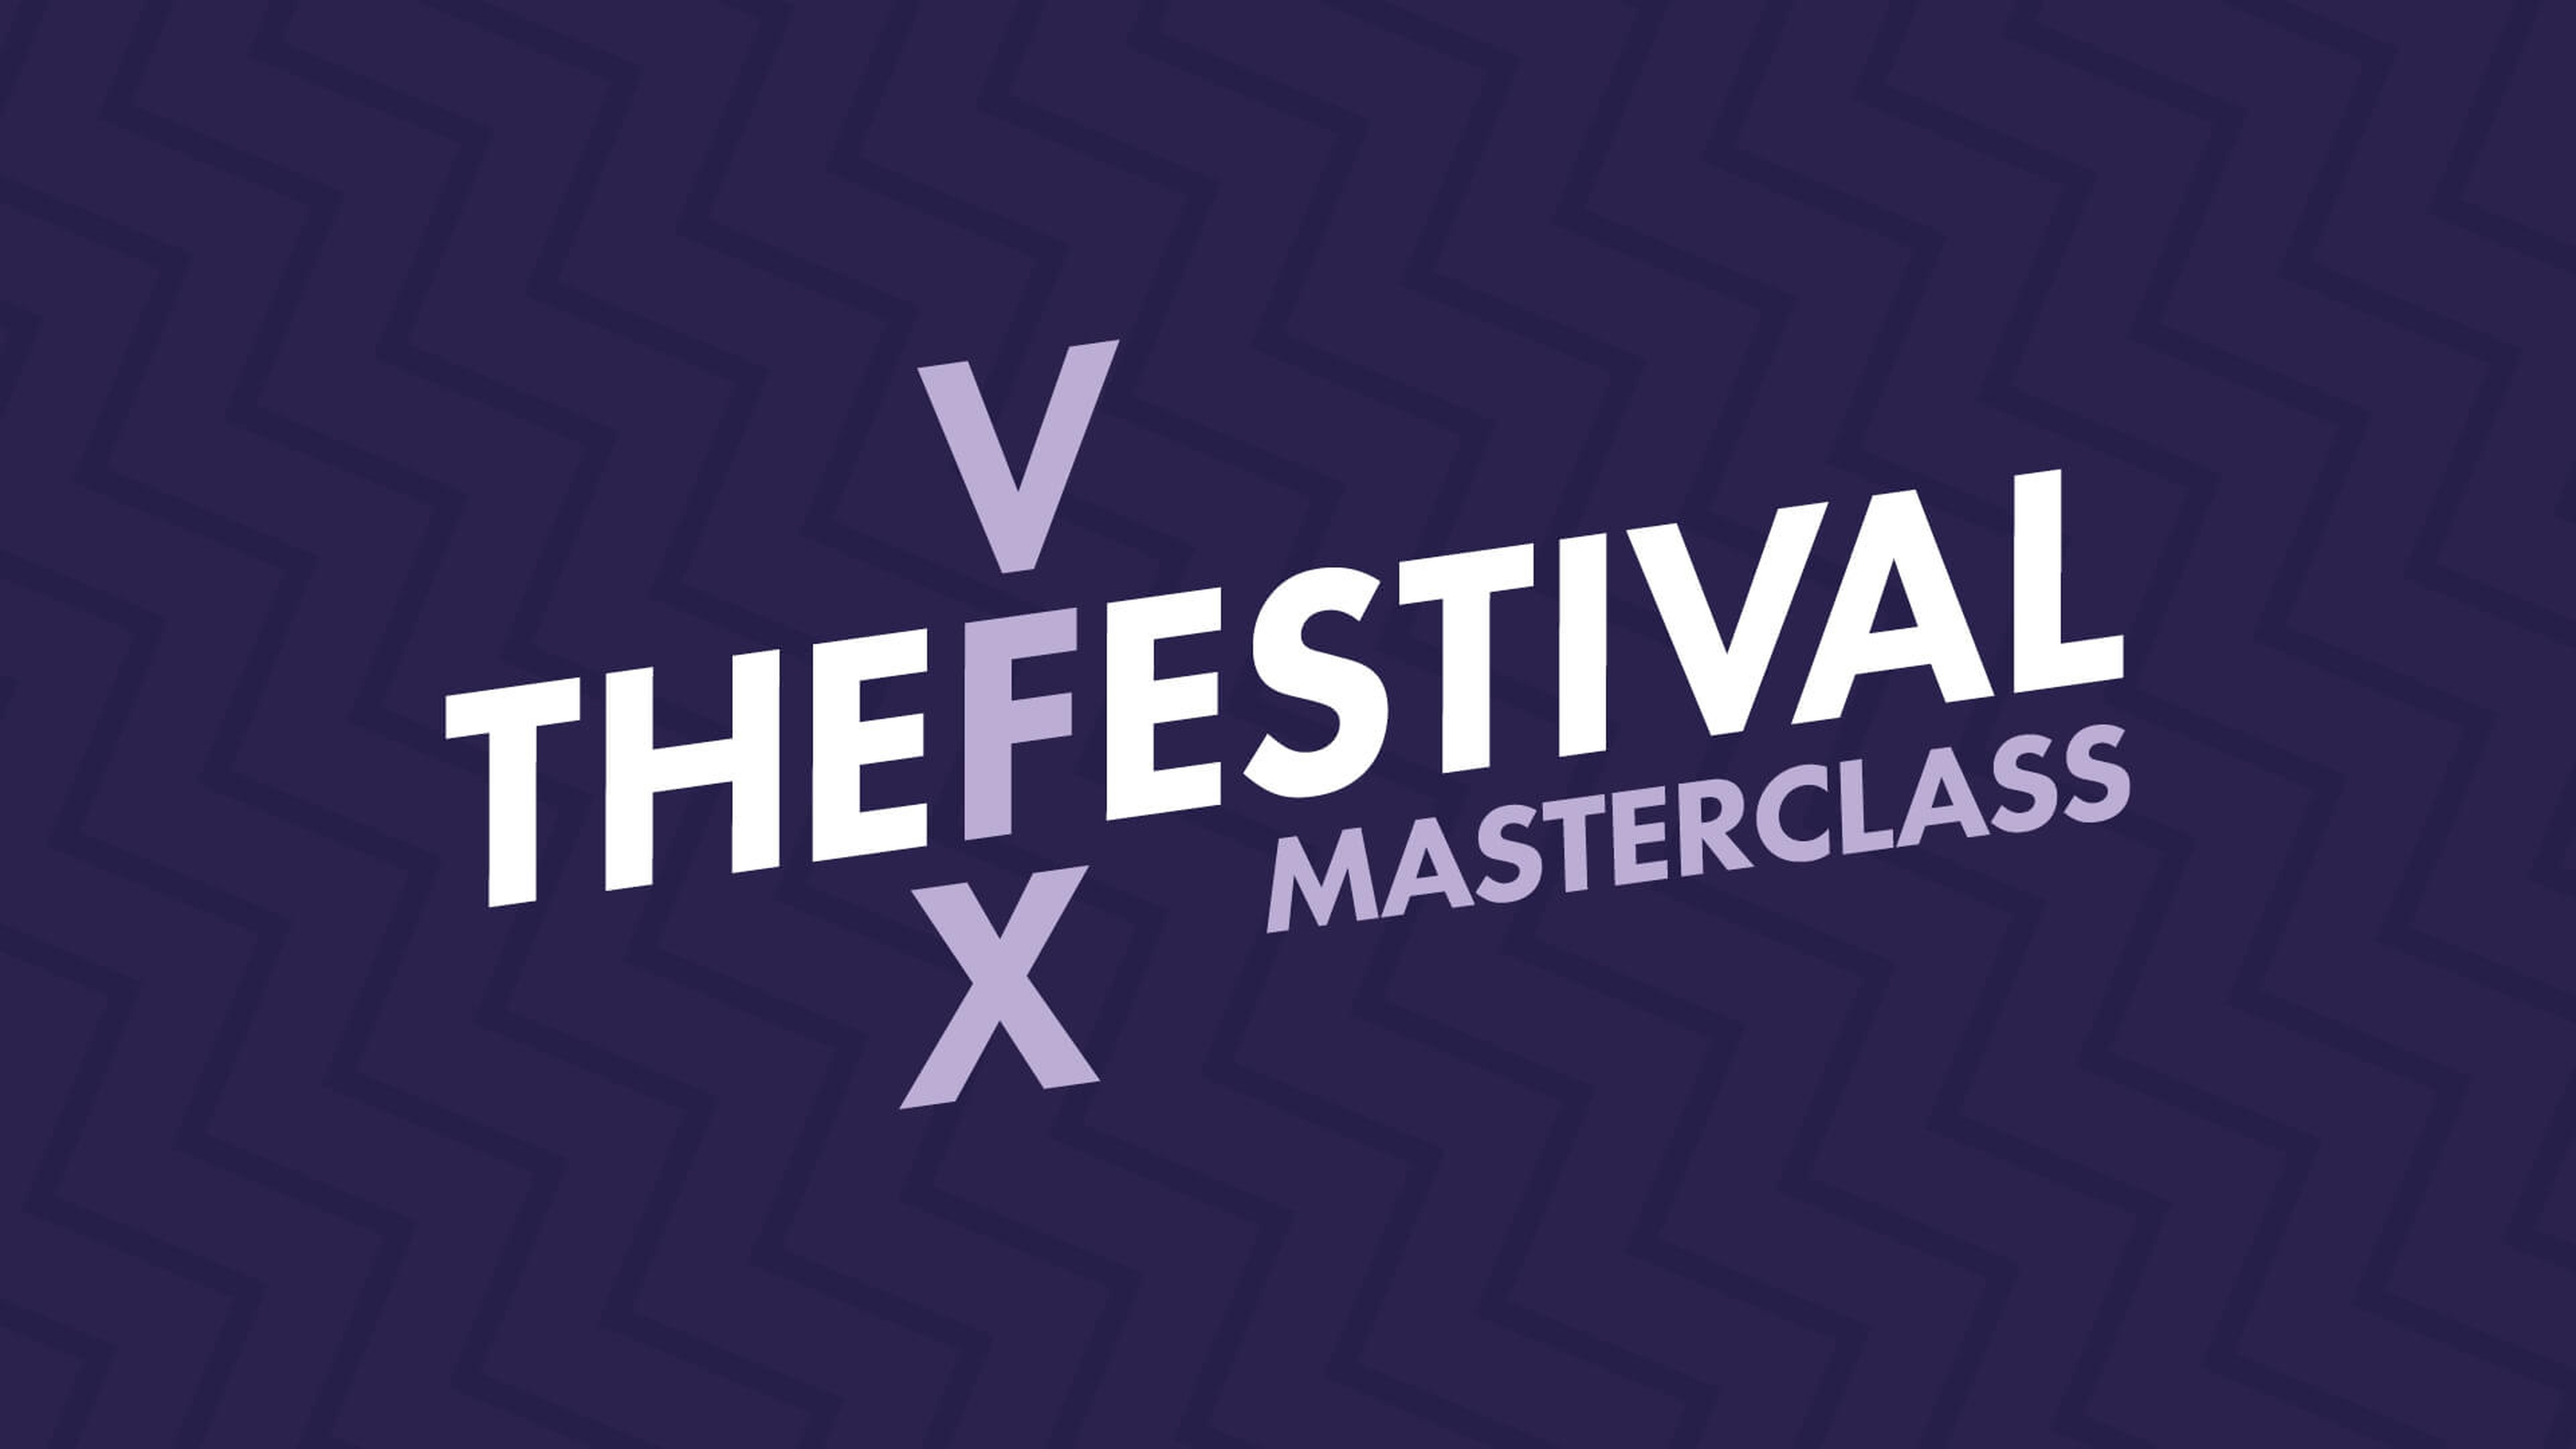 The VFX Festival masterclass logo on a navy background